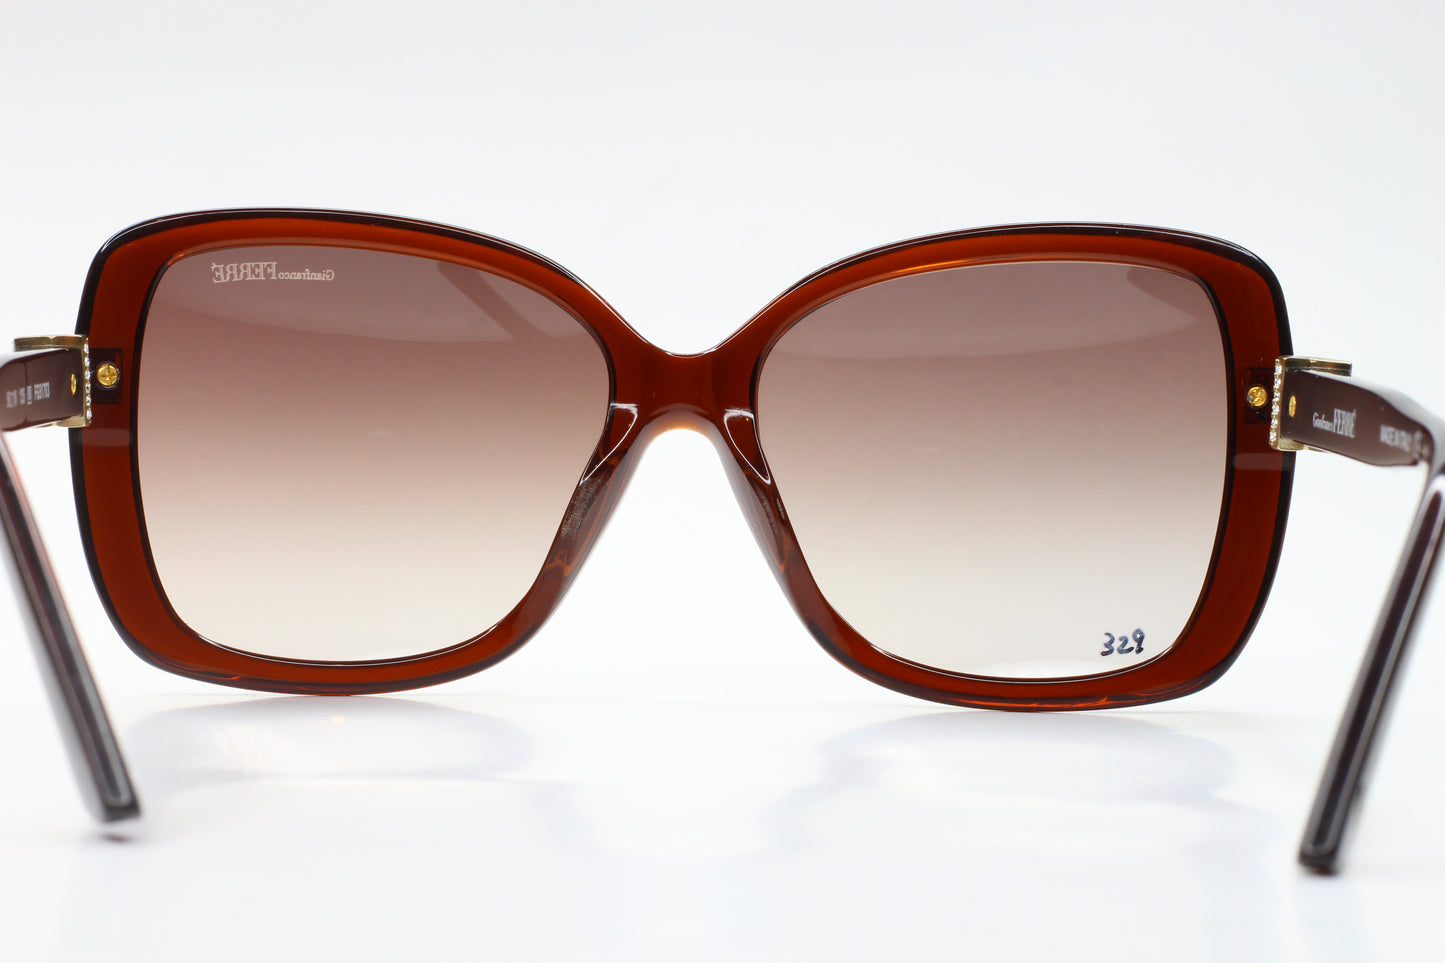 Gianfranco Ferre FG51703 Brown Designer Italy Sunglasses